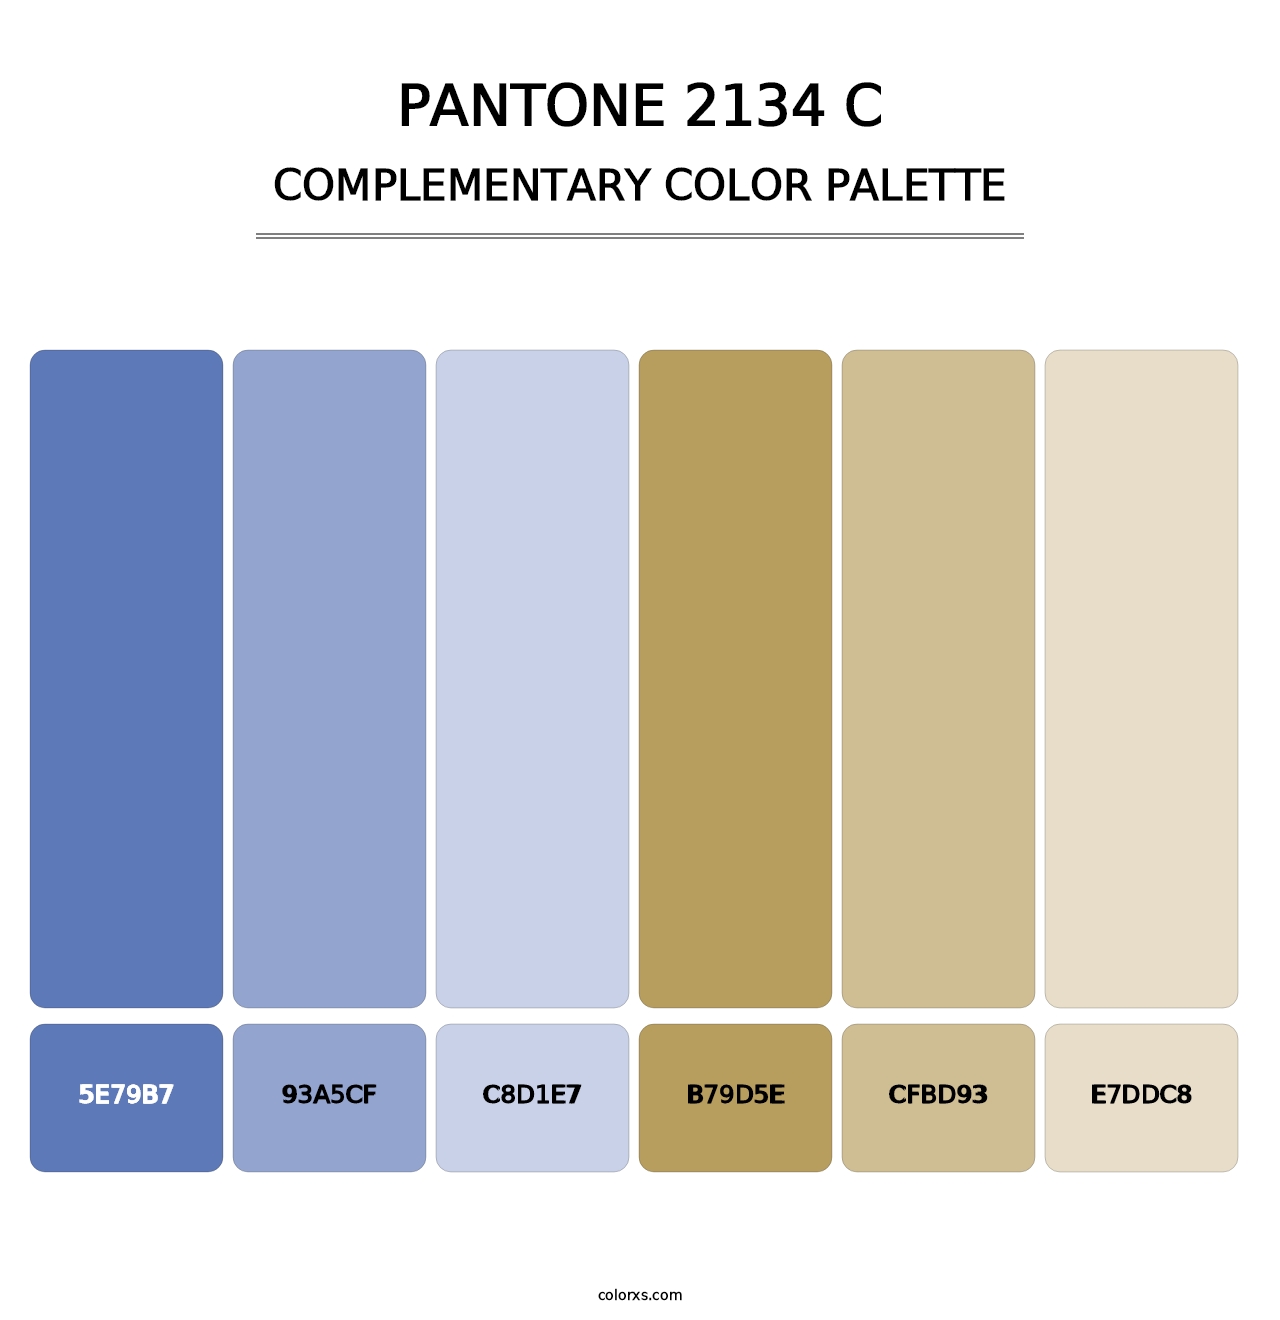 PANTONE 2134 C - Complementary Color Palette